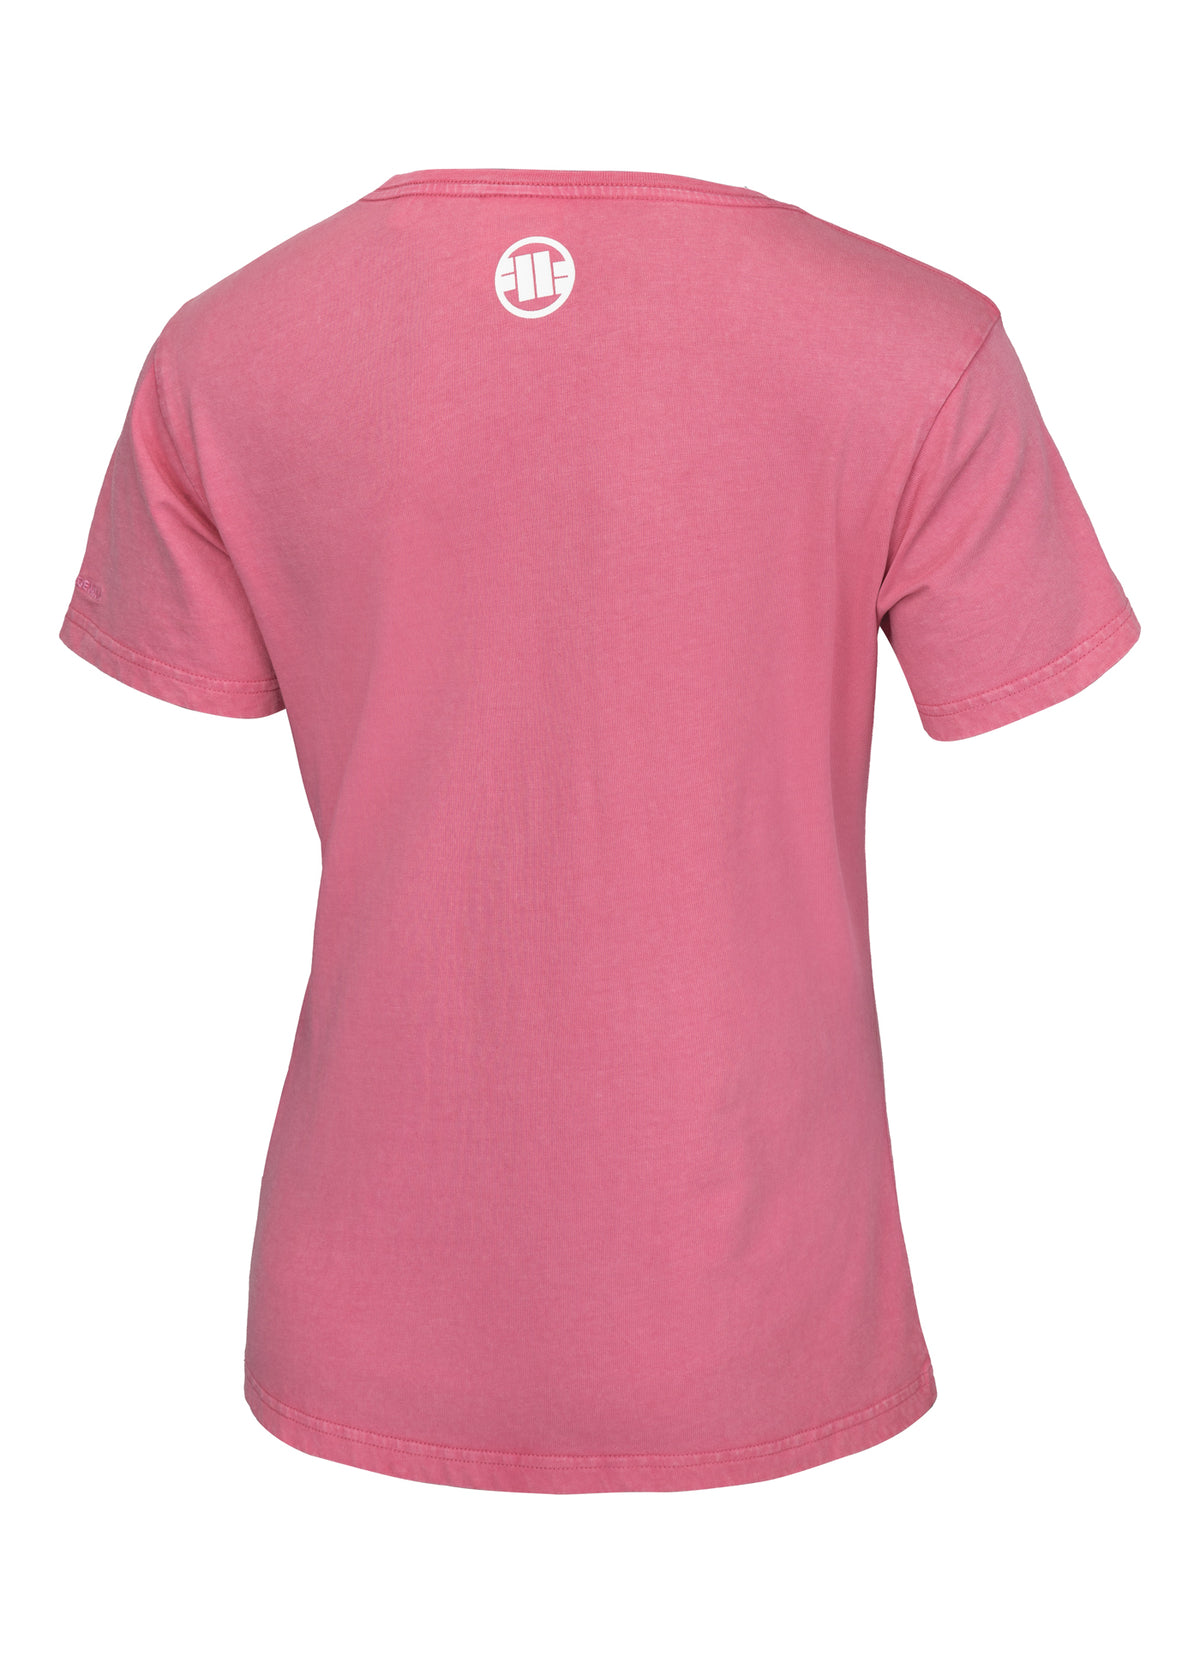 SCRATCH DENIM WASH Pink T-shirt - Pitbullstore.eu